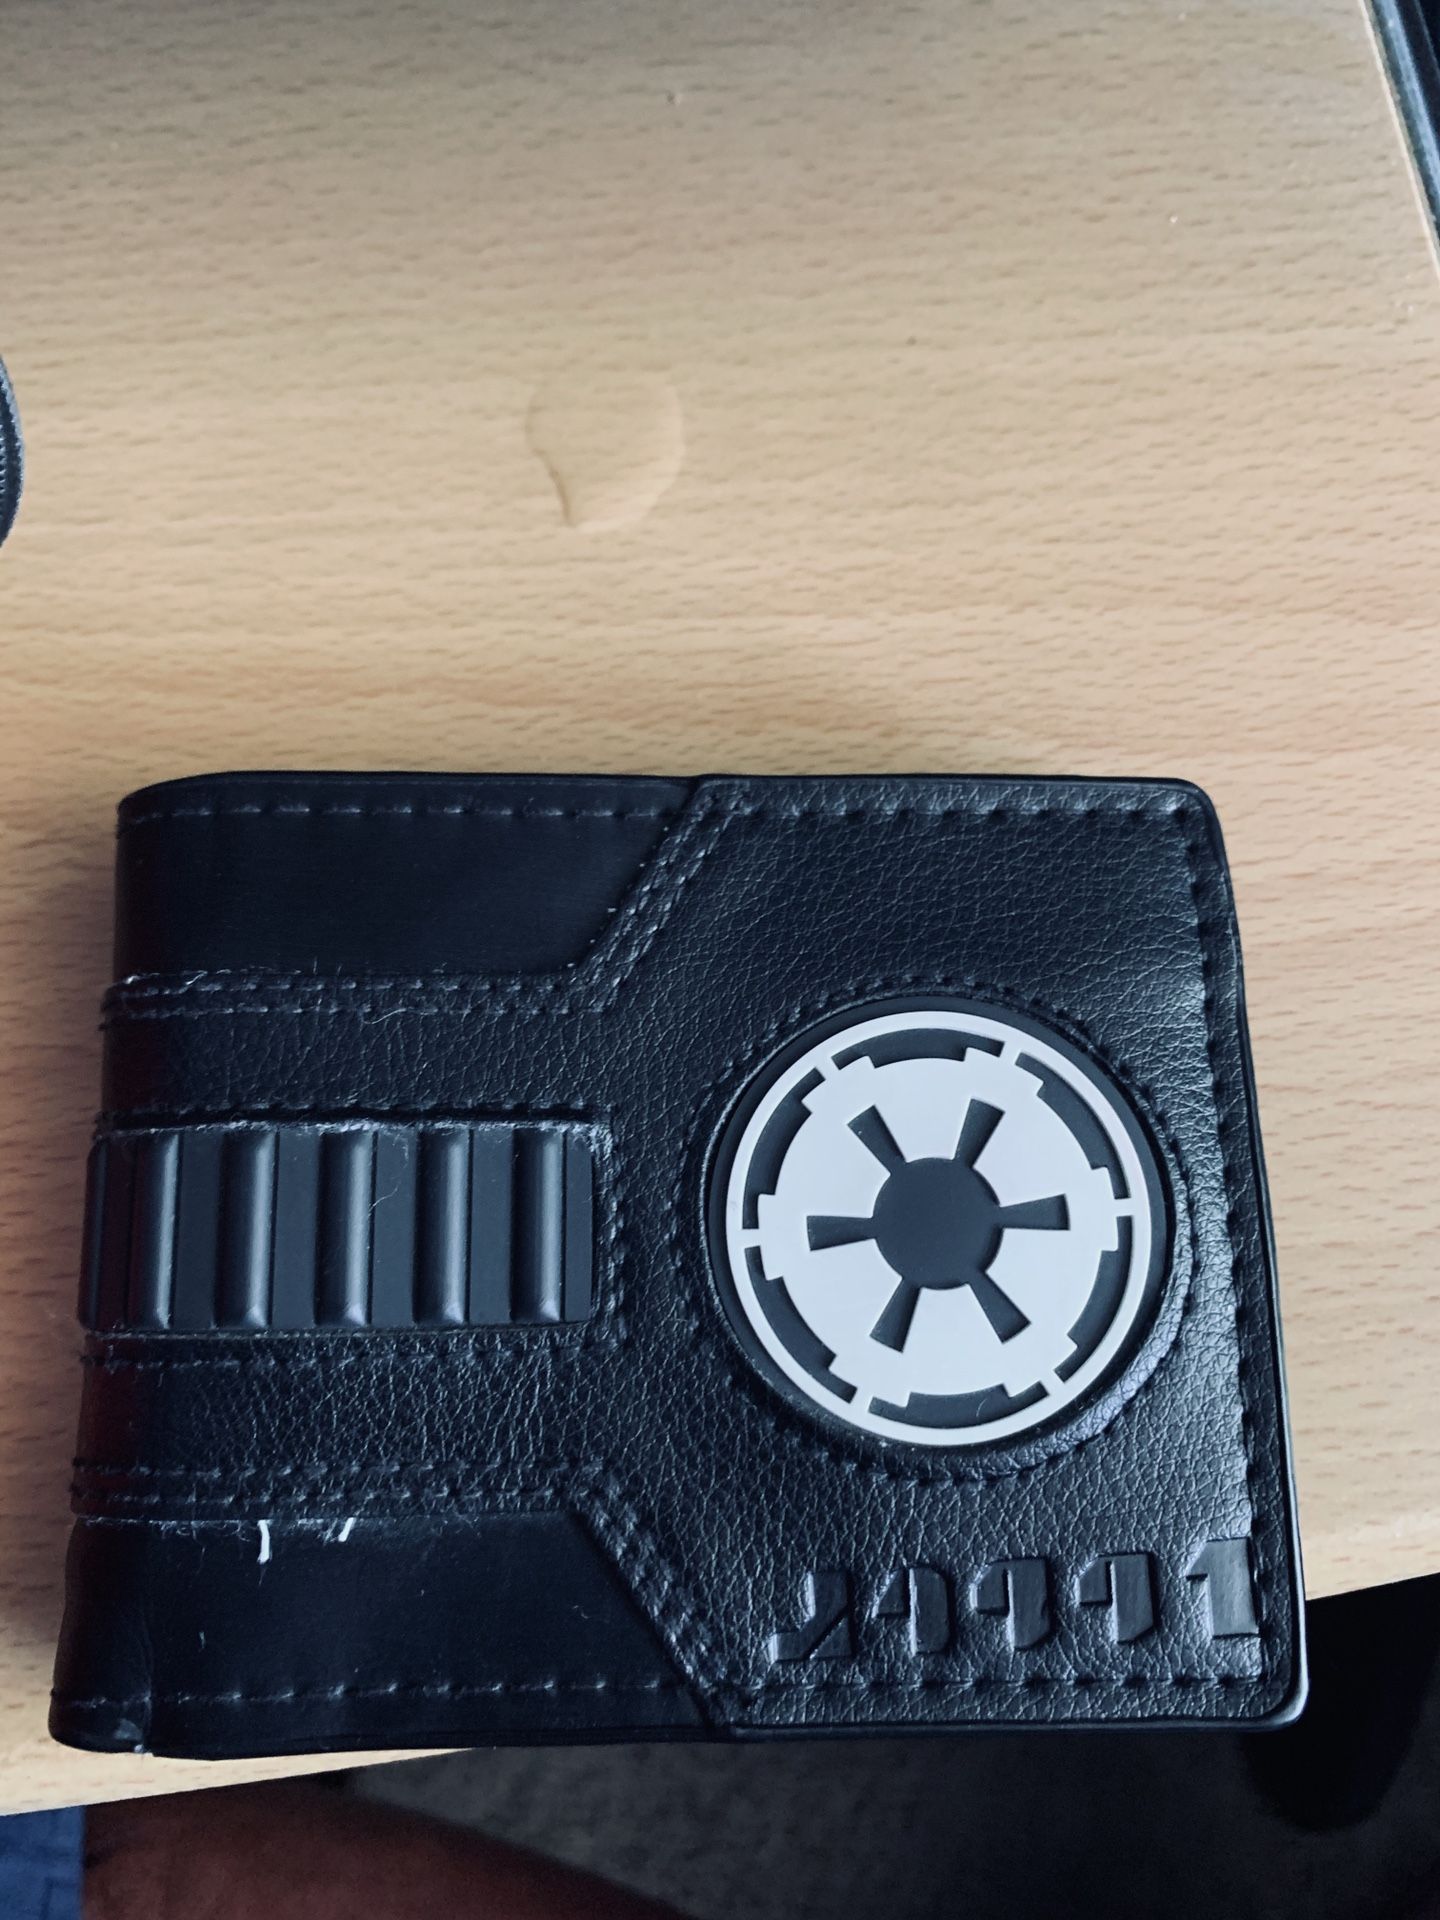 A black leather Star Wars wallet